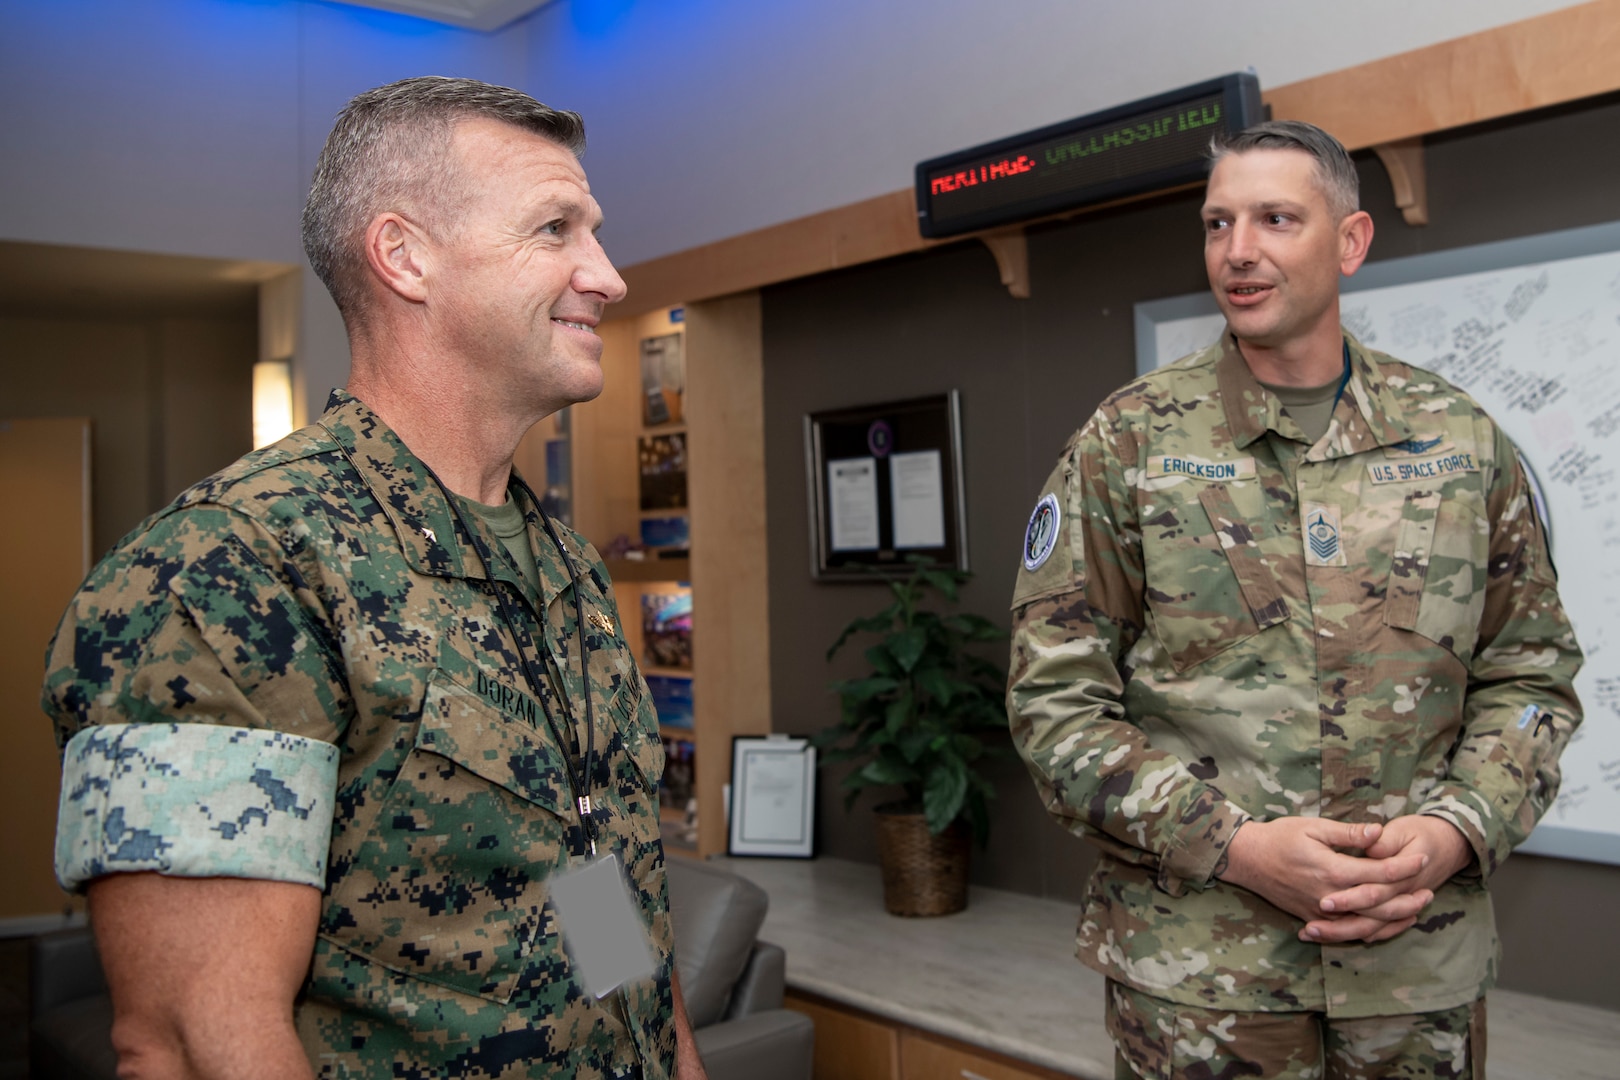 Two military men speak to eachother